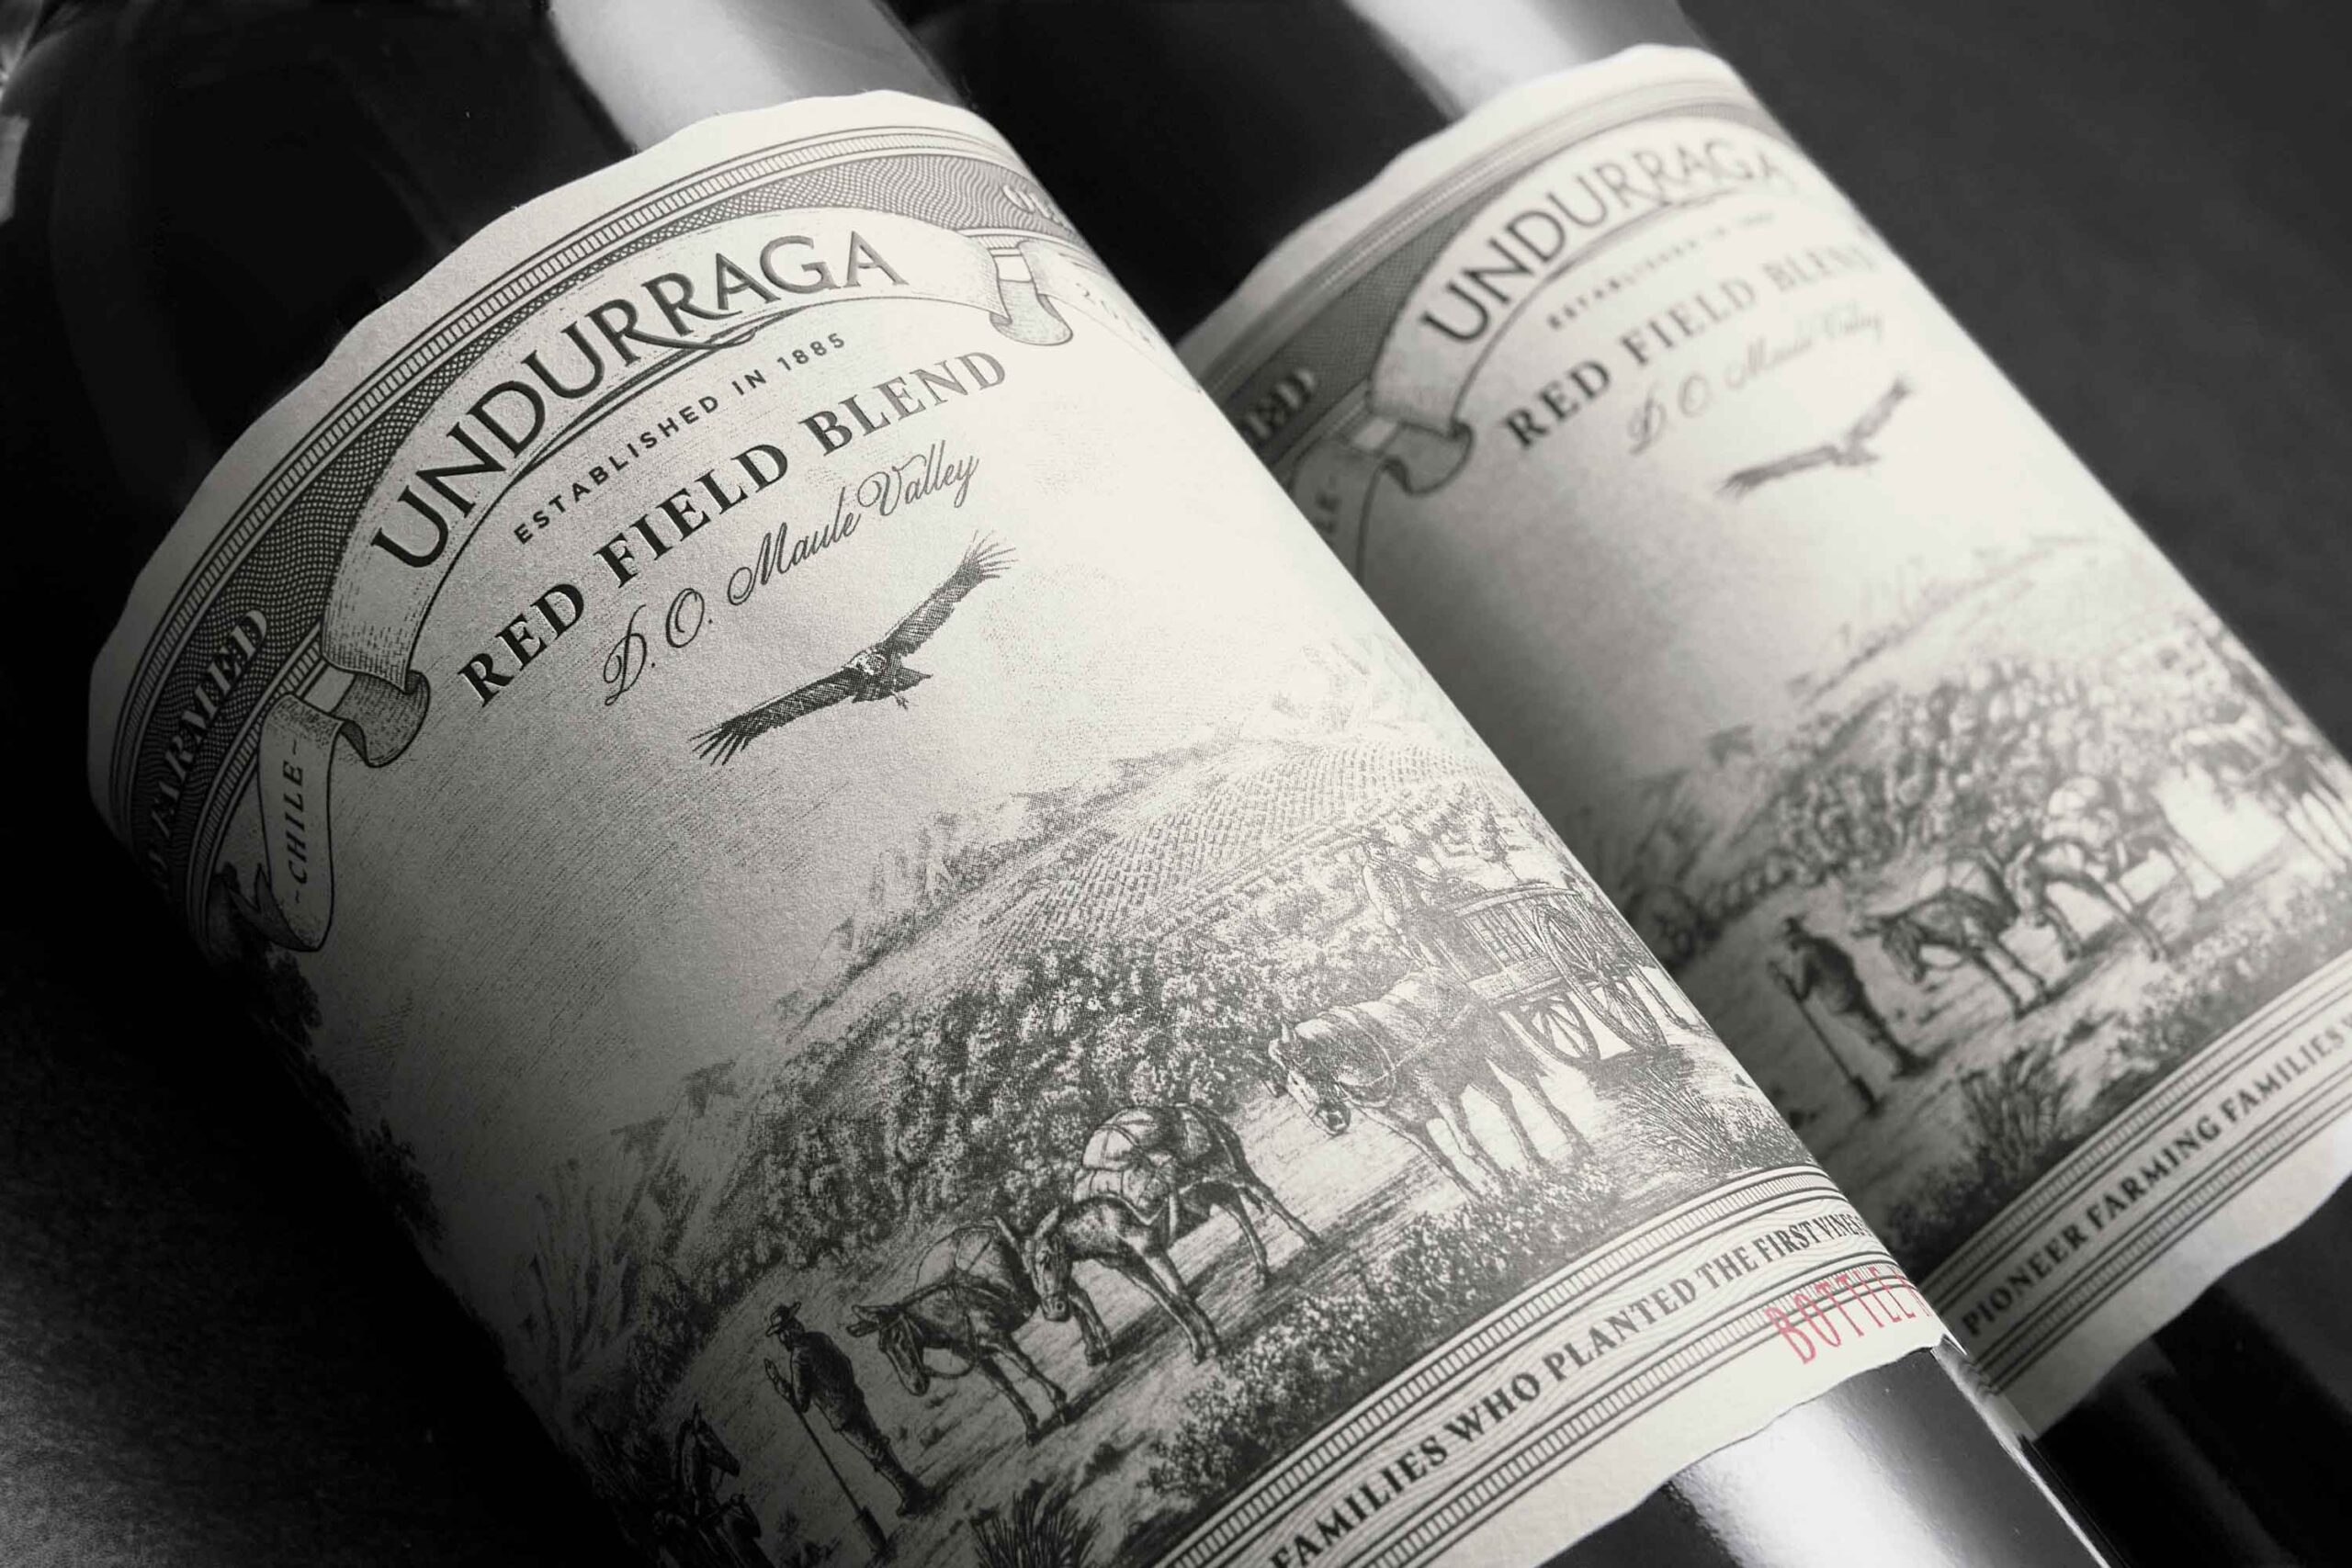 Red Field Blend wine label design for Undurraga wines in Chile illustration engraved premium